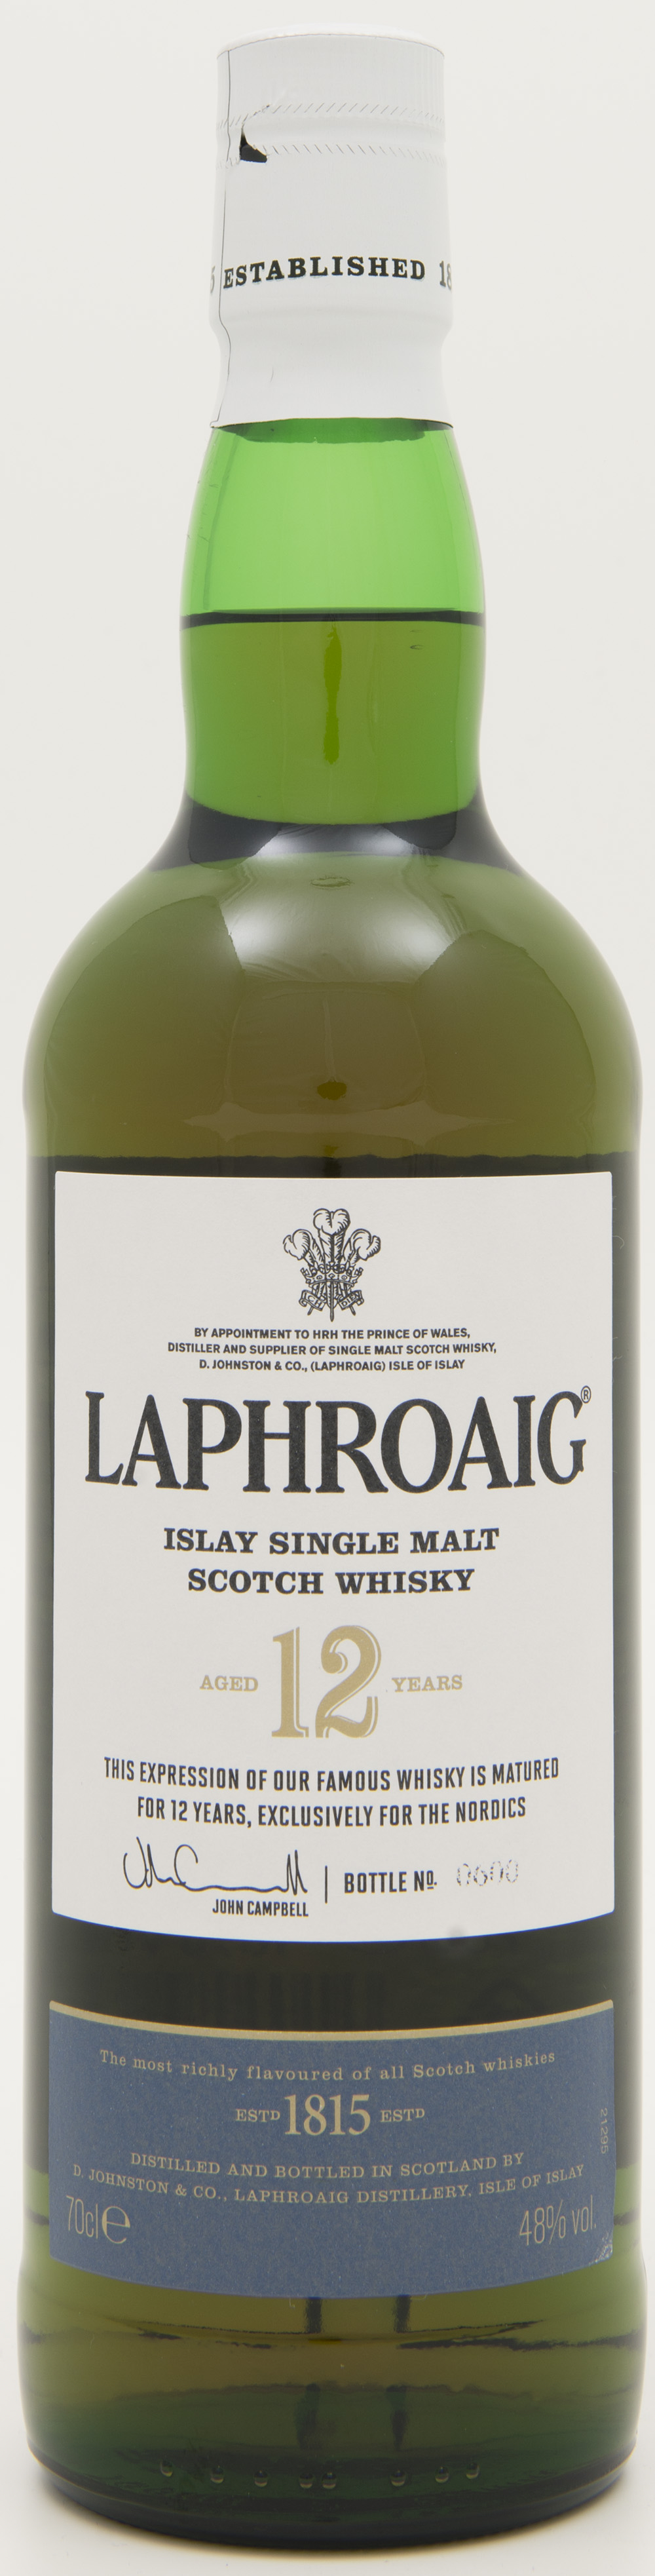 Billede: DSC_6462 Laphroaig 12 (for our nordic friends) - bottle front.jpg